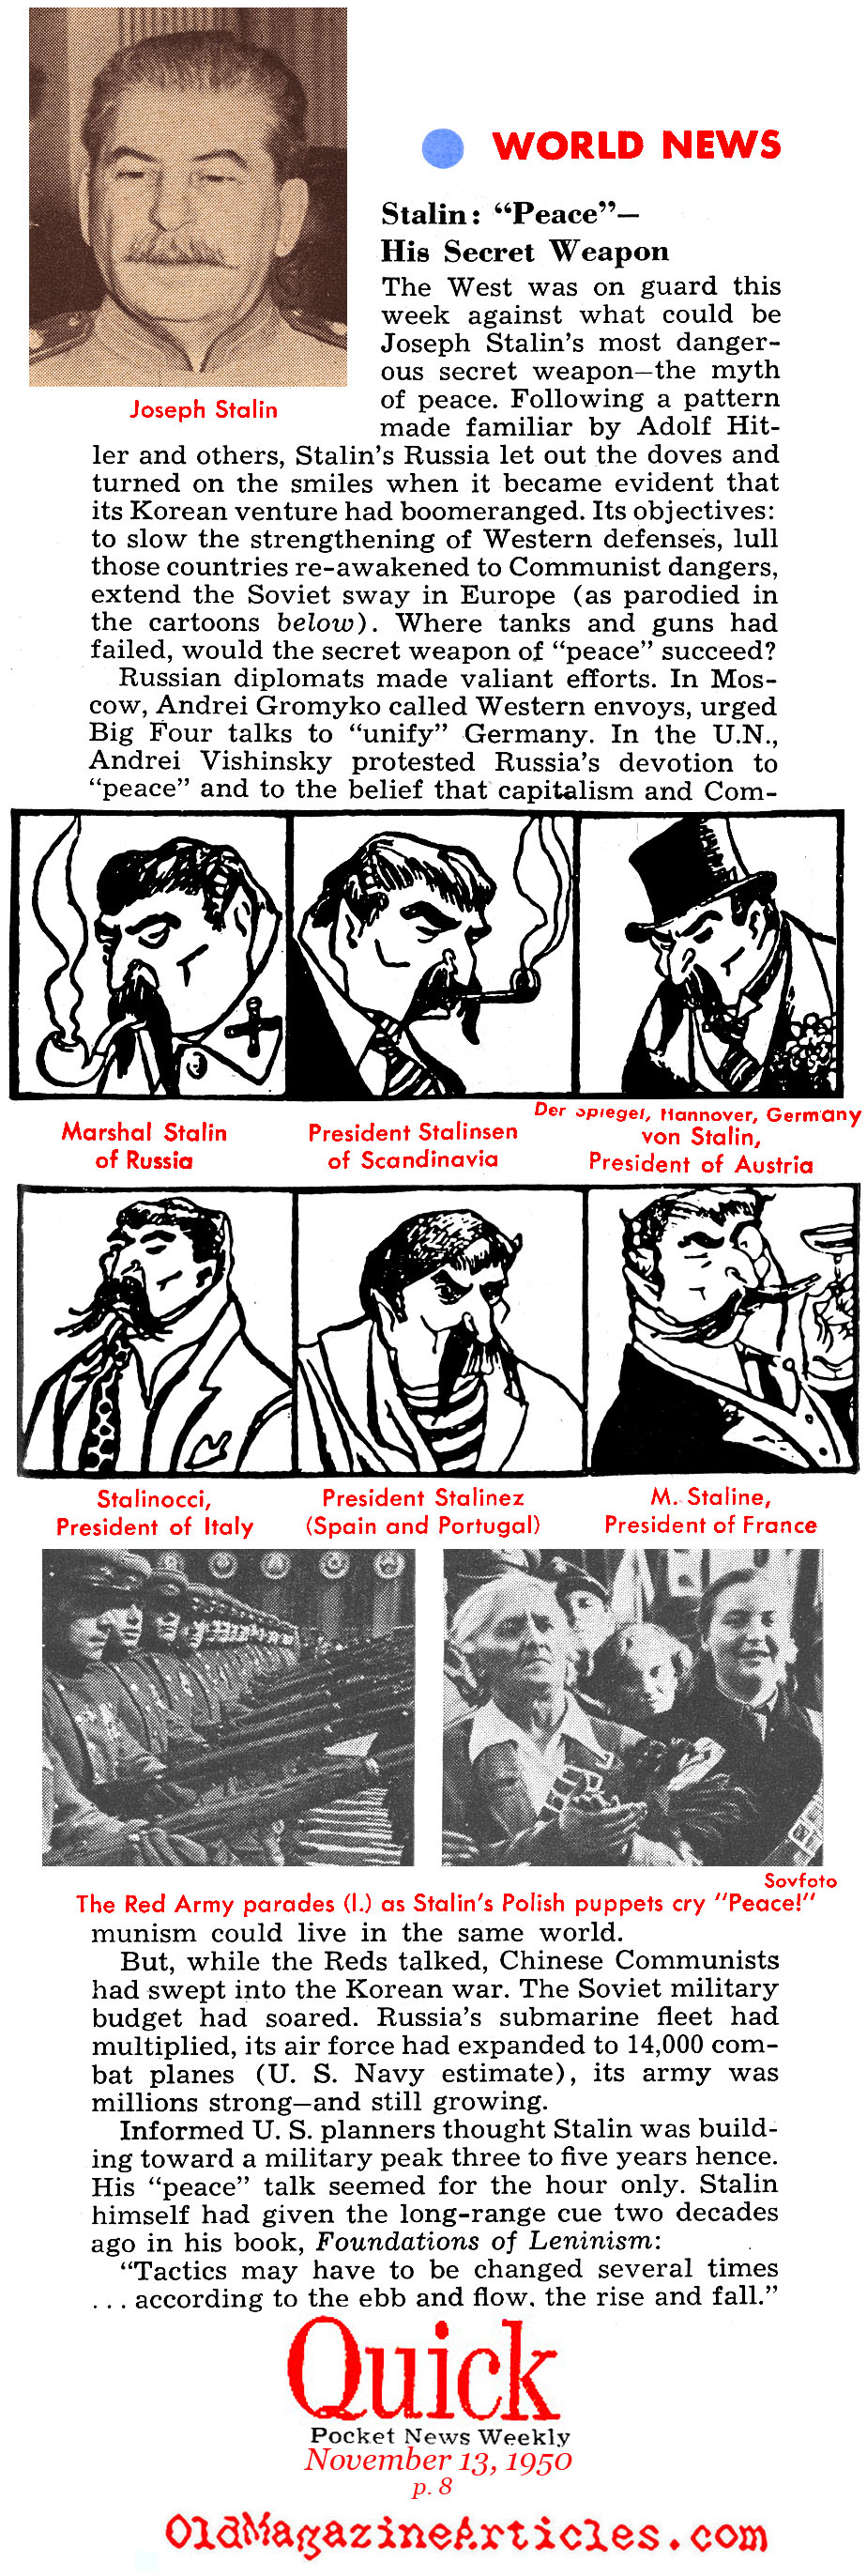 The Stalin ''Peace Plan'' (Quick Magazine, 1950)